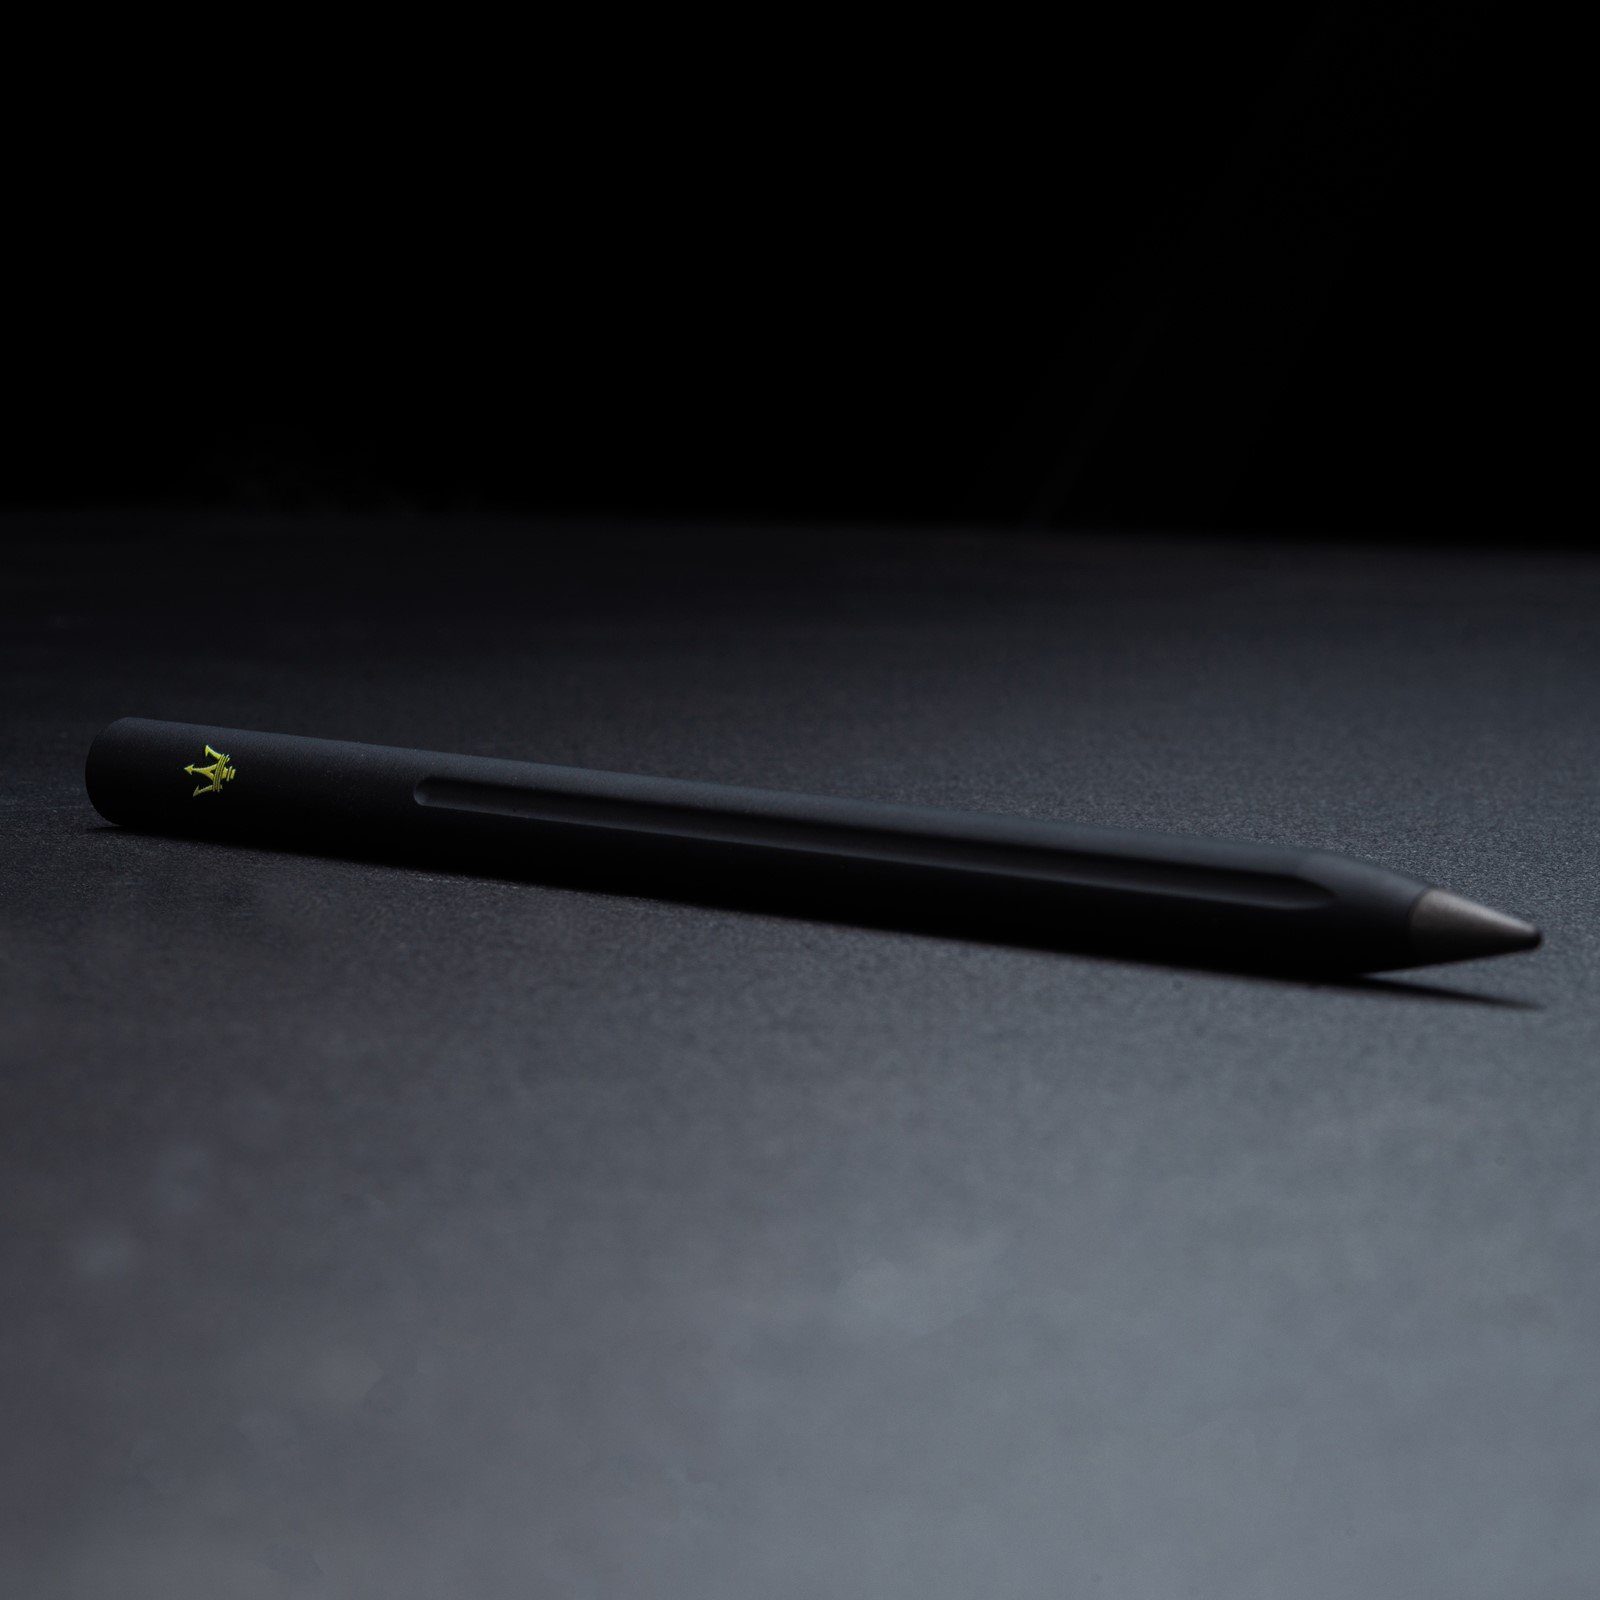 Pininfarina Bleistift Maserati Bleistift (kein Bleier Schreibgerä, Grafeex Pininfarina Set) Schwarz Smart Pencil